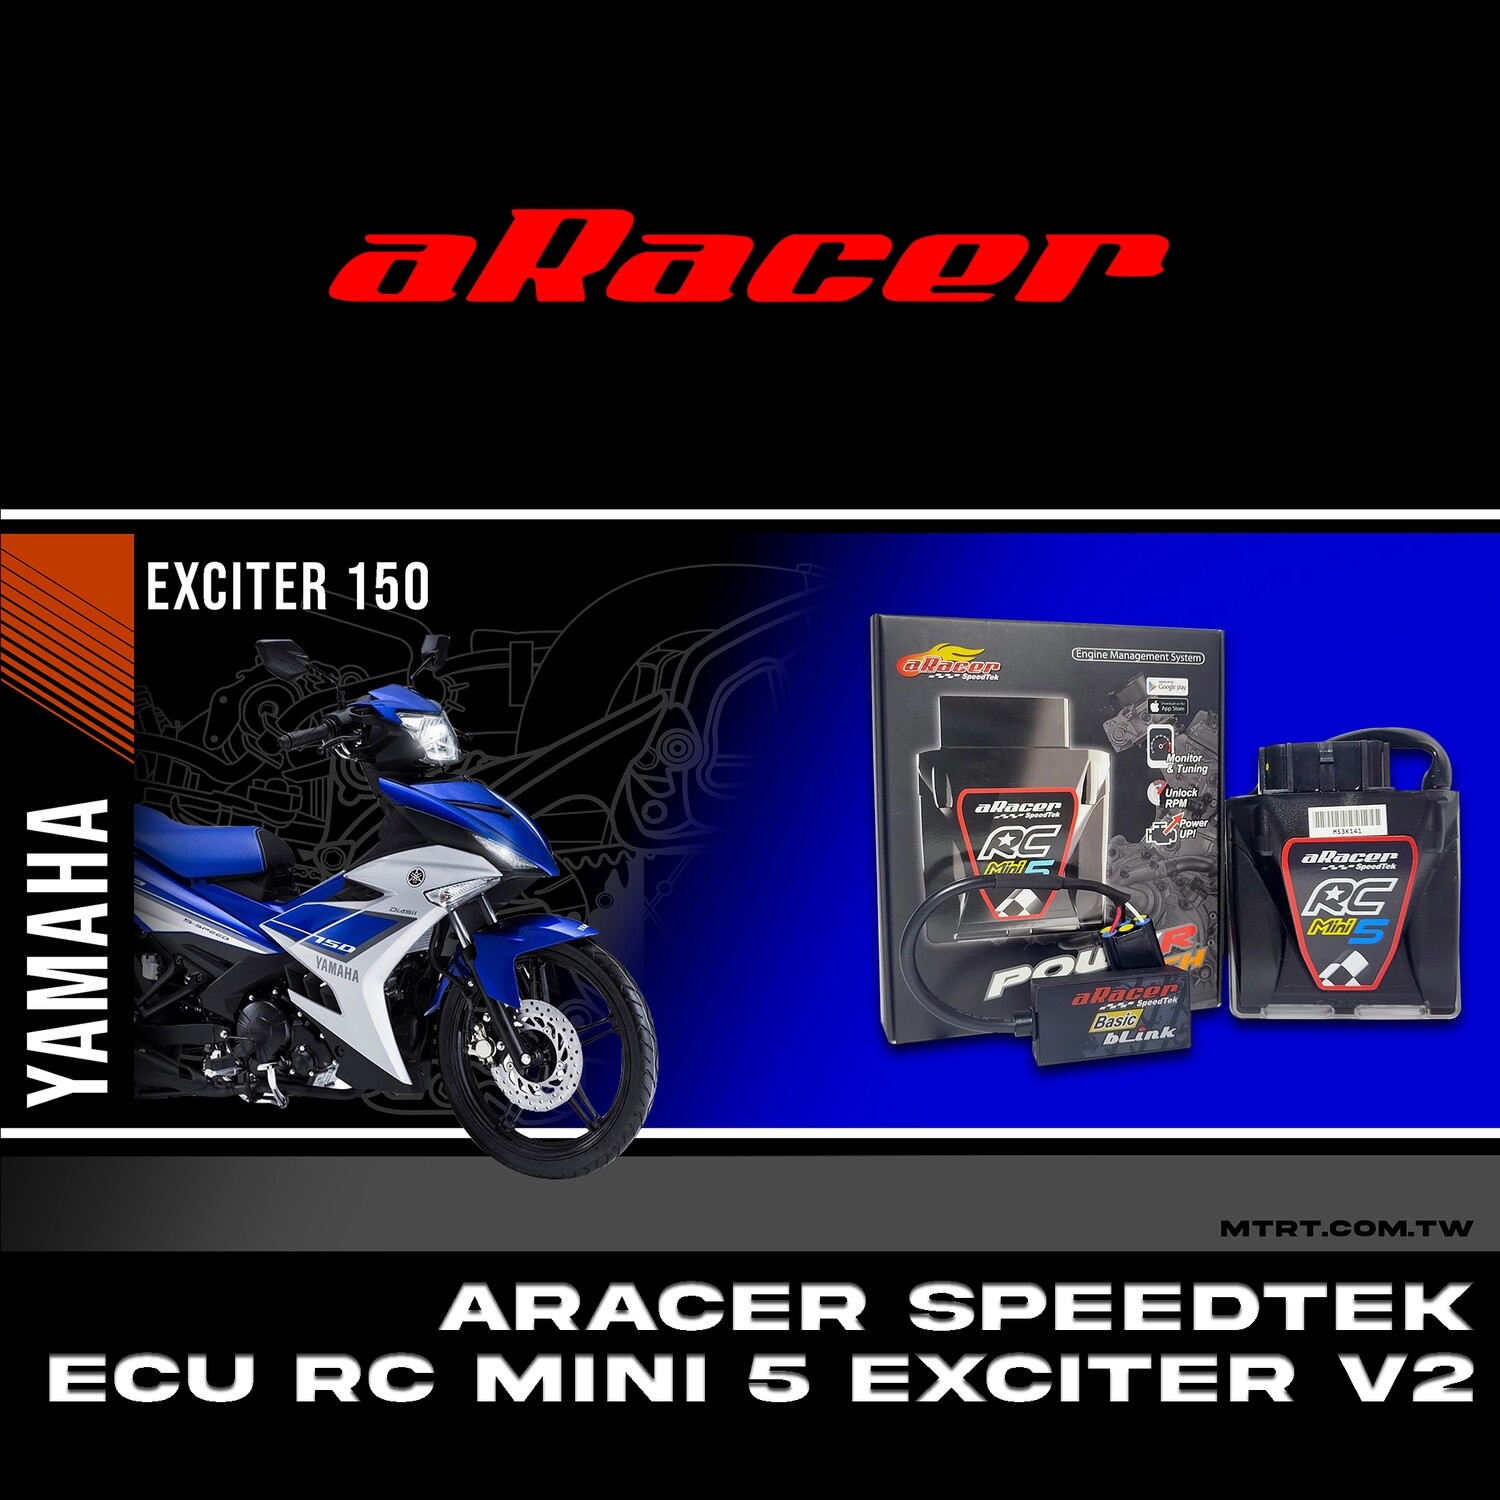 ARACER speedtek ECU RC Mini 5 EXCITER (V2)